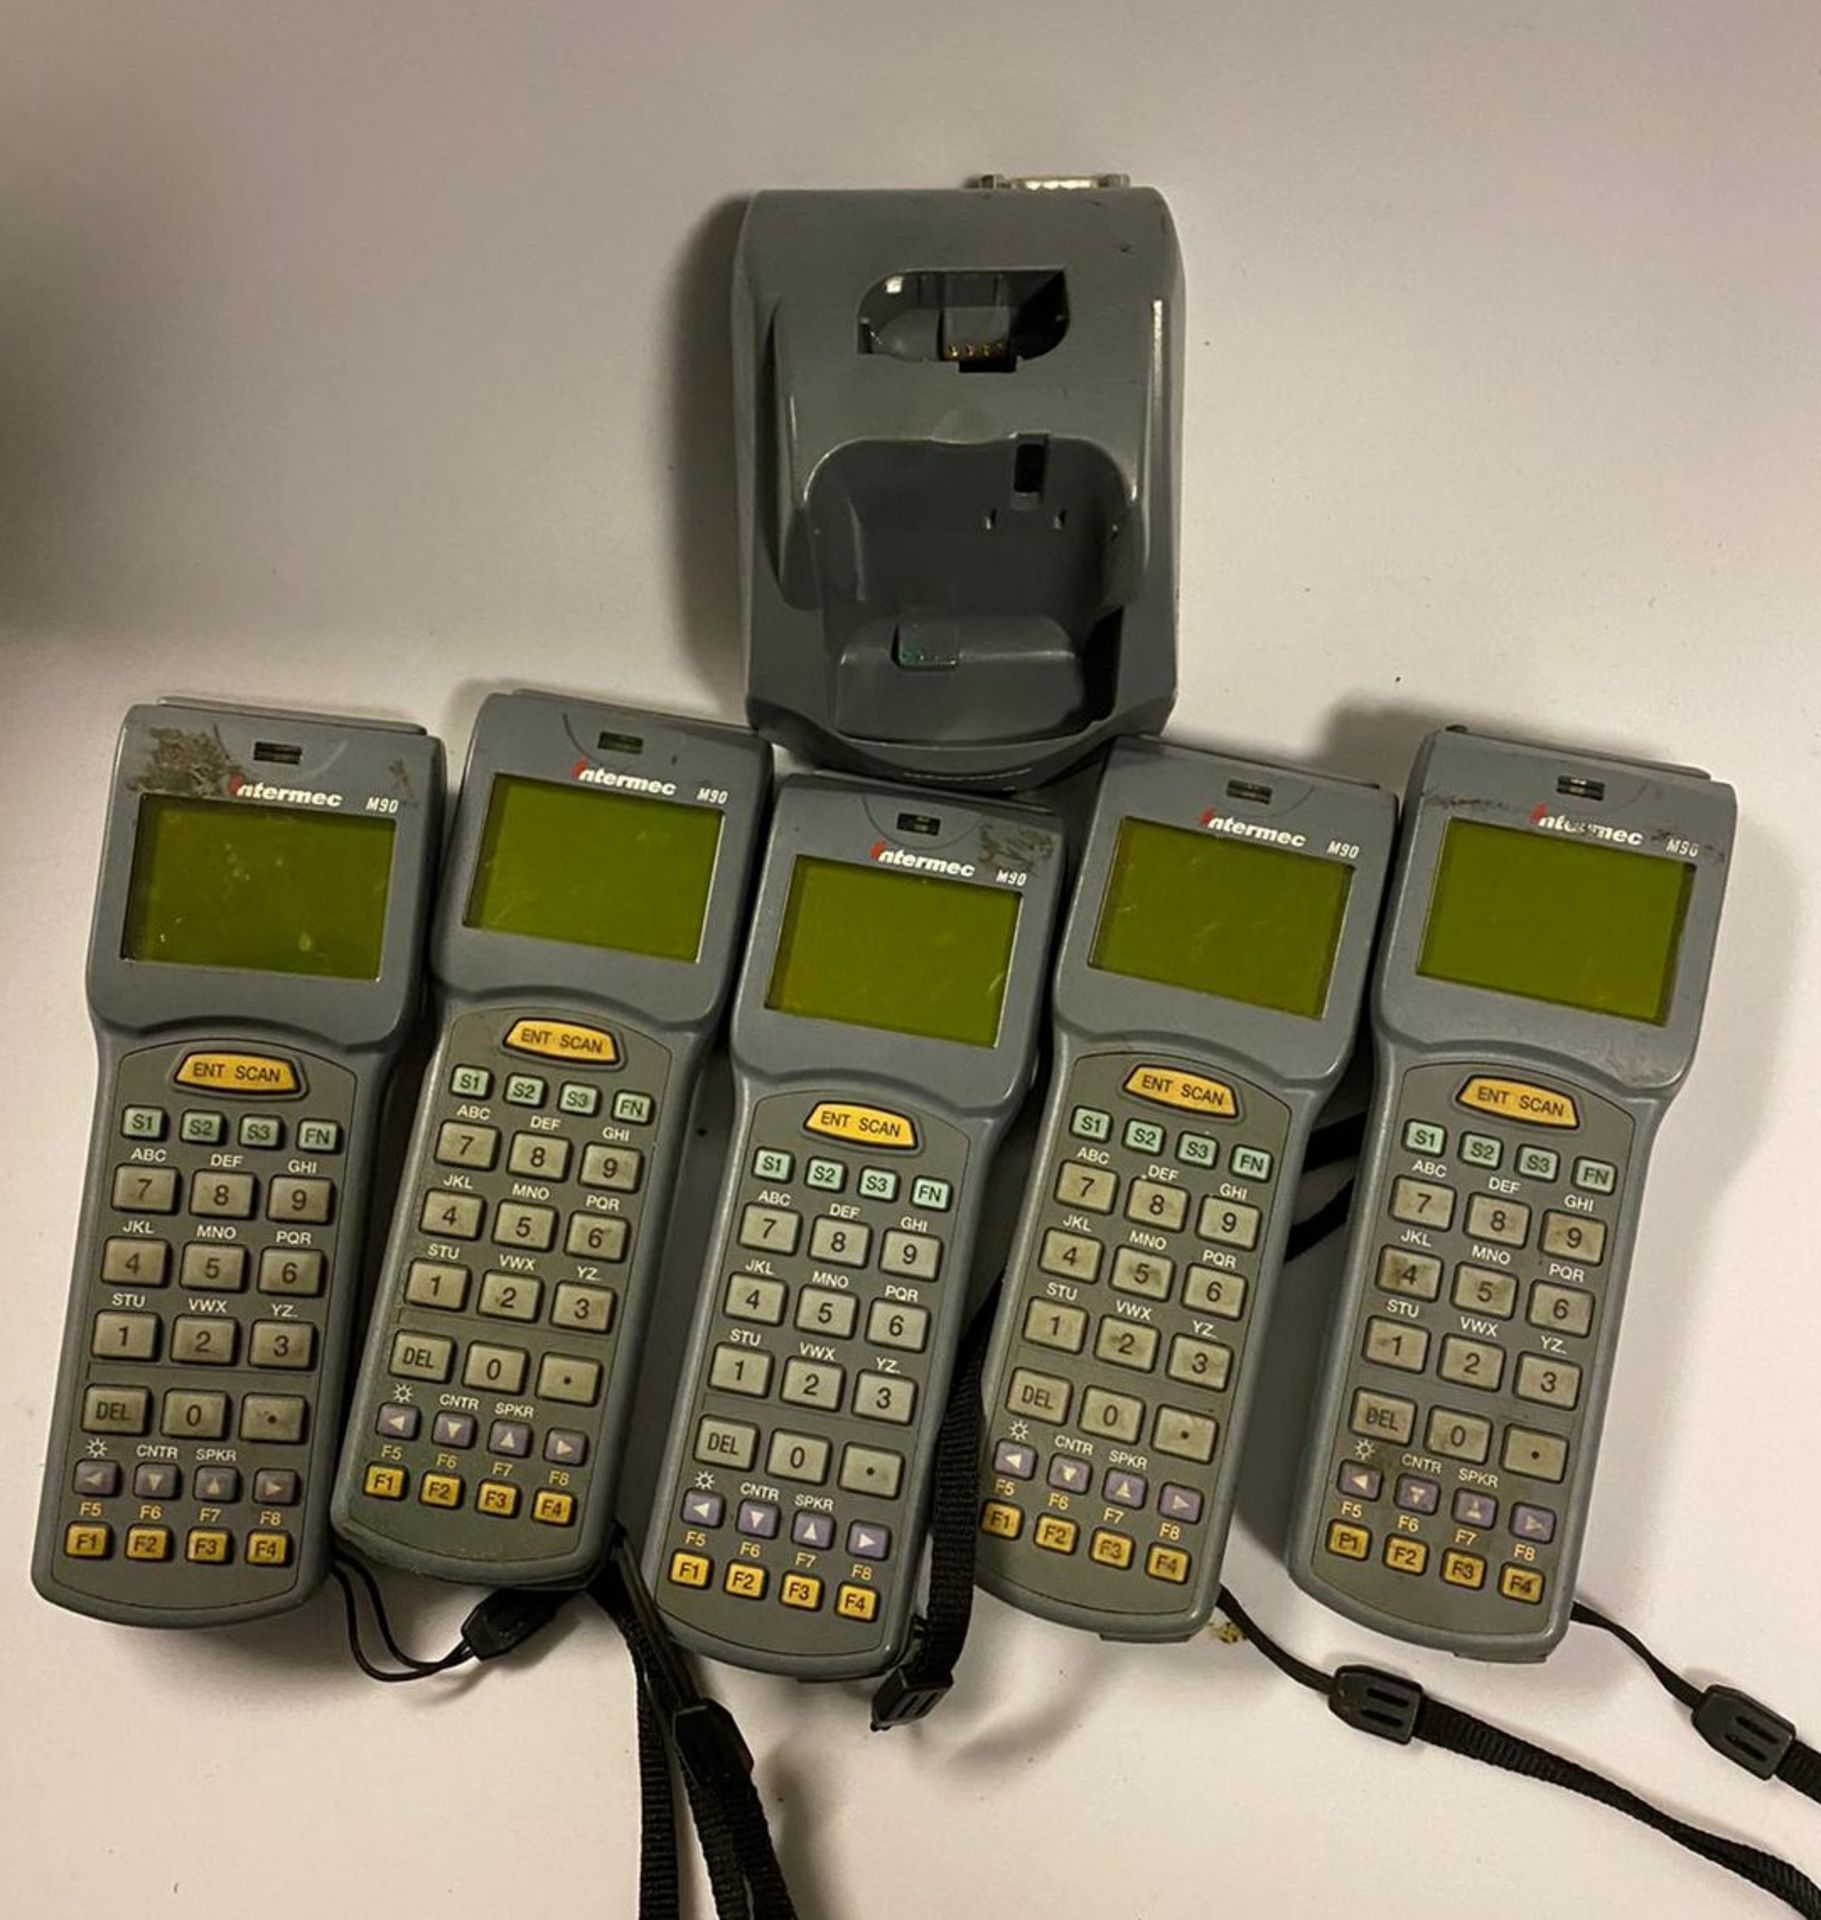 2 x Intermec M90 Portable Barcode Scanner - Used Condition - Location: Altrincham WA14 - - Image 6 of 8